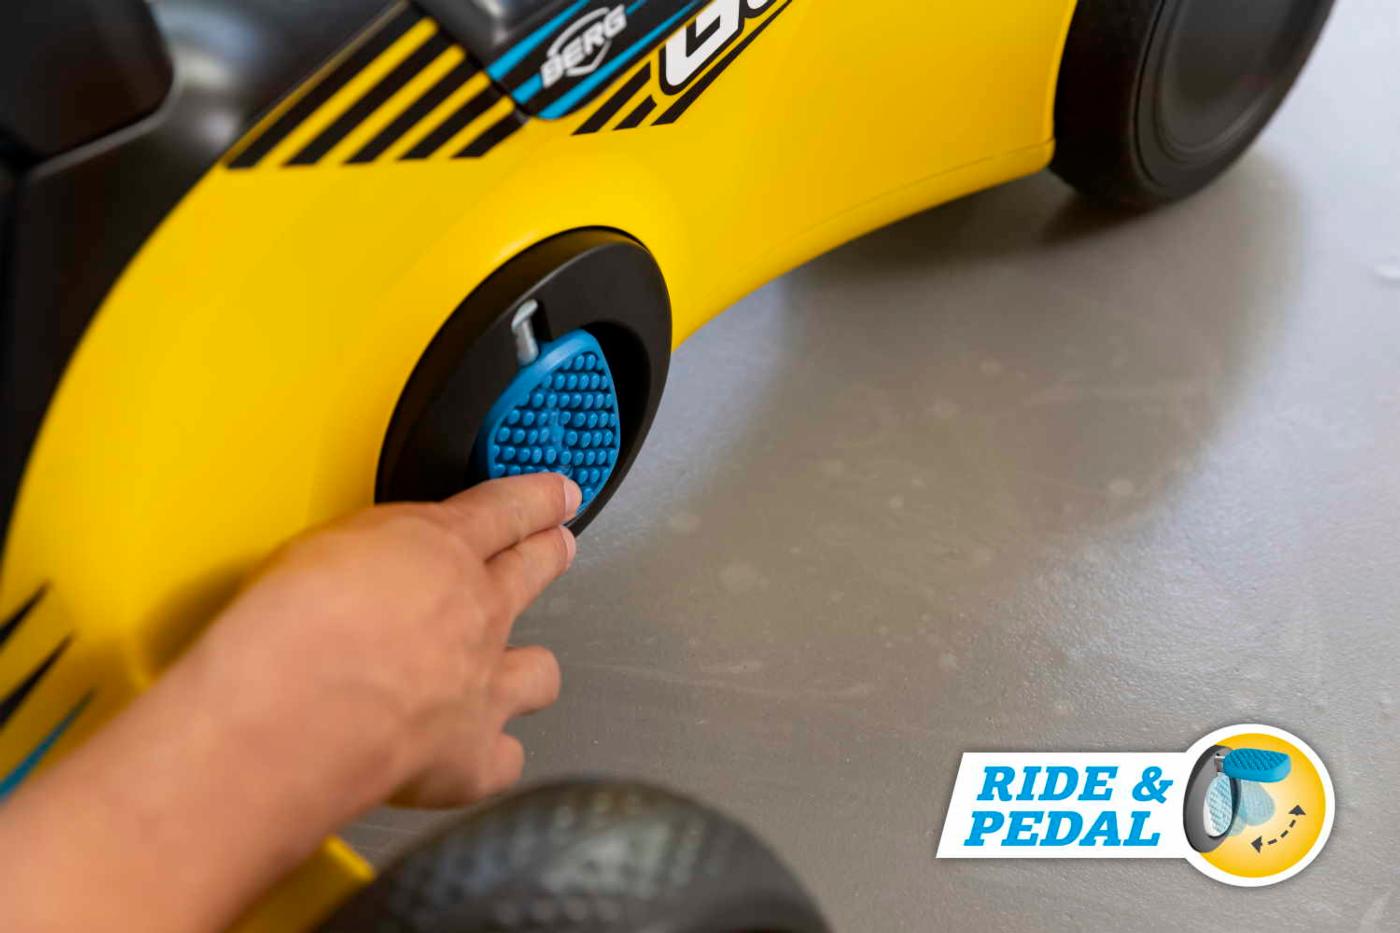  BERG GO² SparX Yellow andador infantil evolutivo a coche de pedales